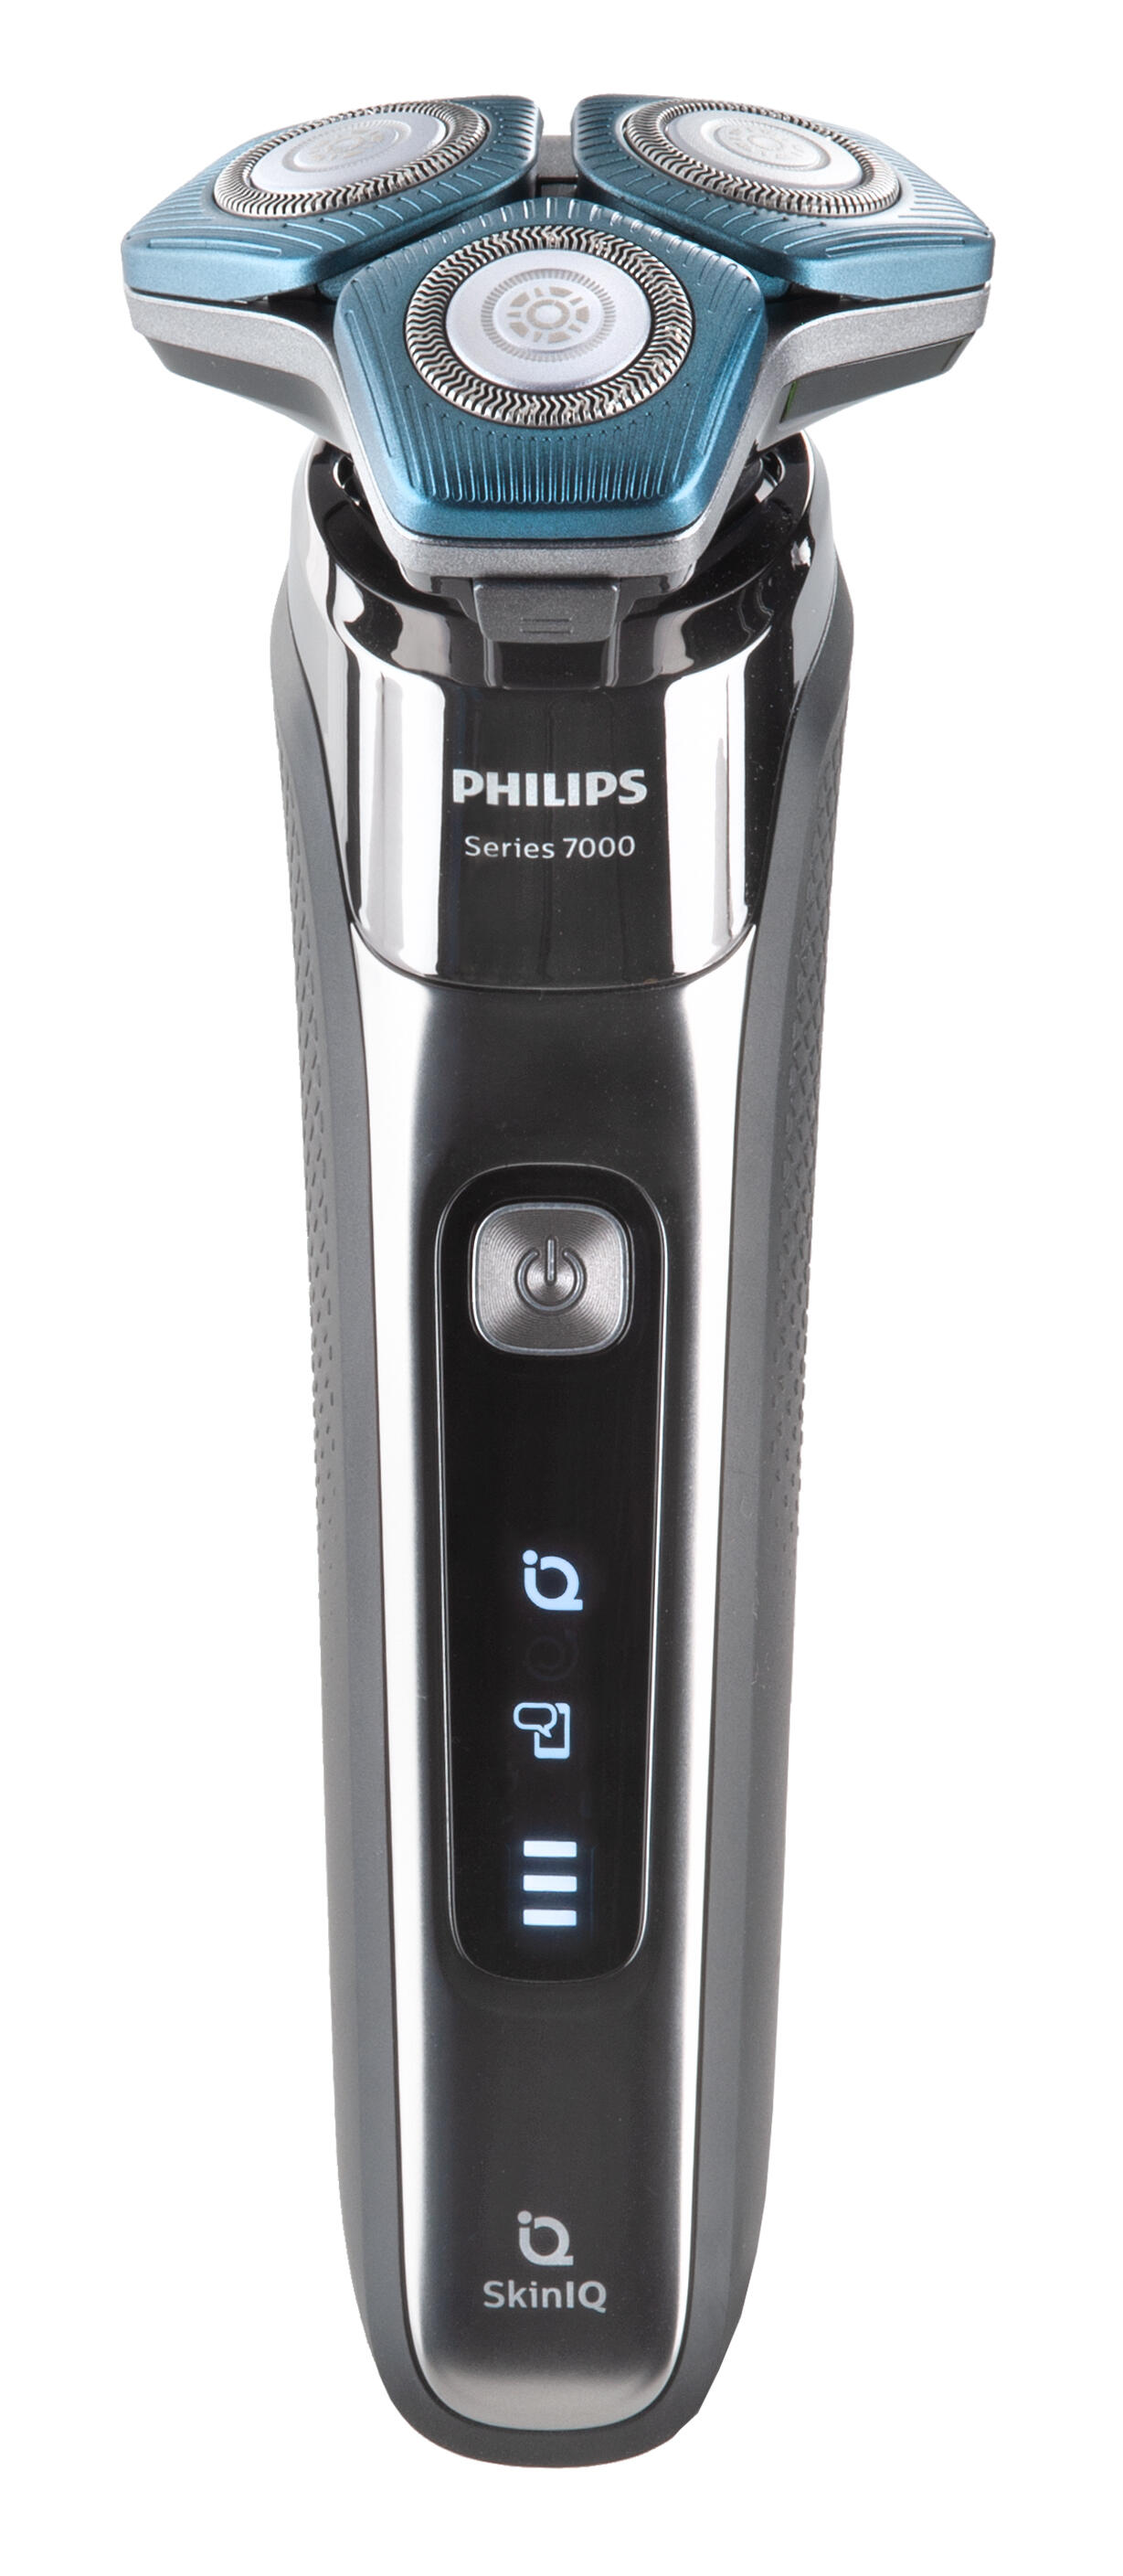 Series 7000 S7783/55 Philips